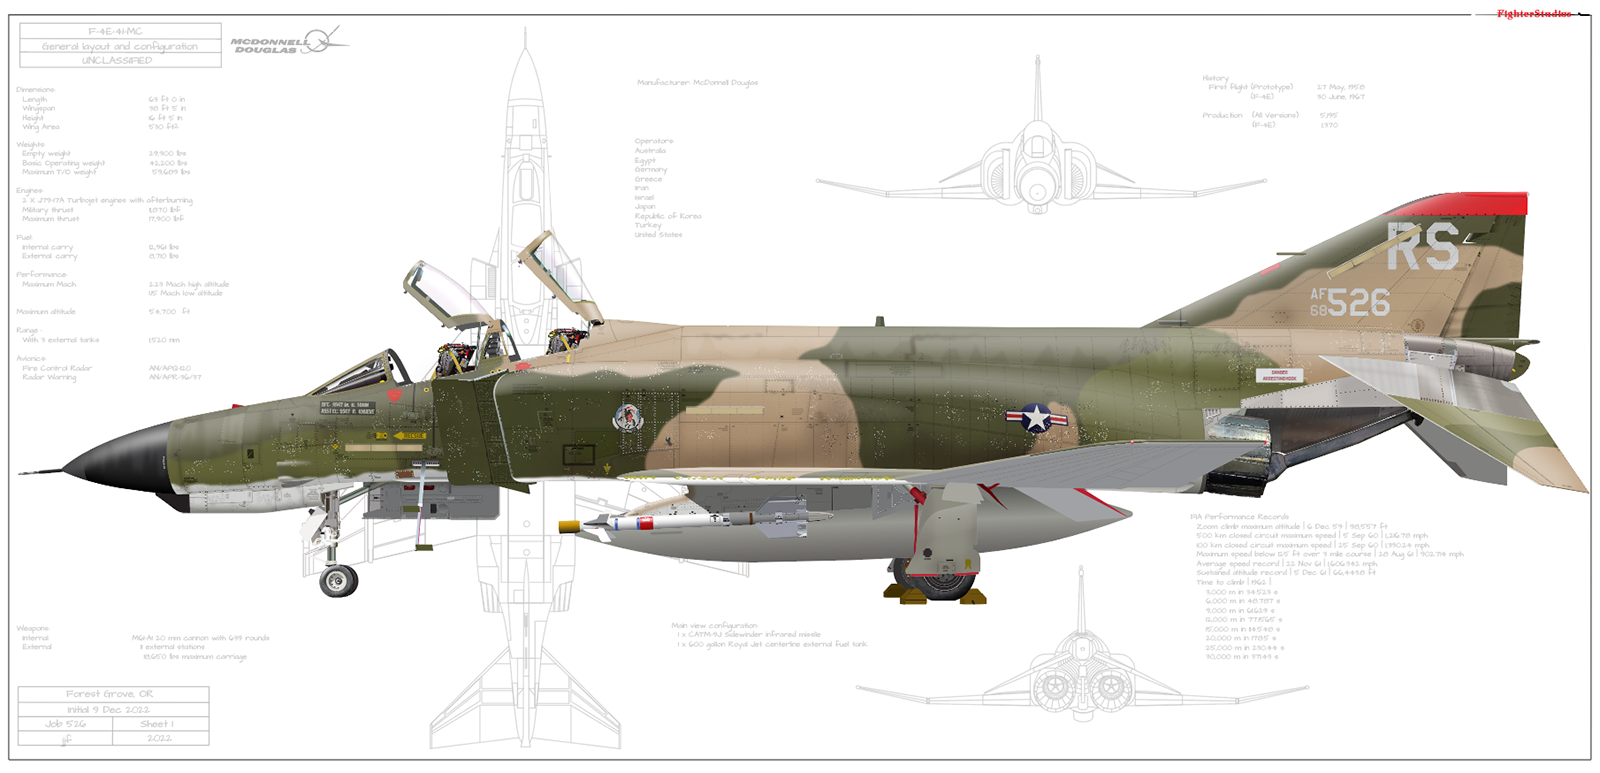 USAF F-4E Phantom II 68-0526 Profile